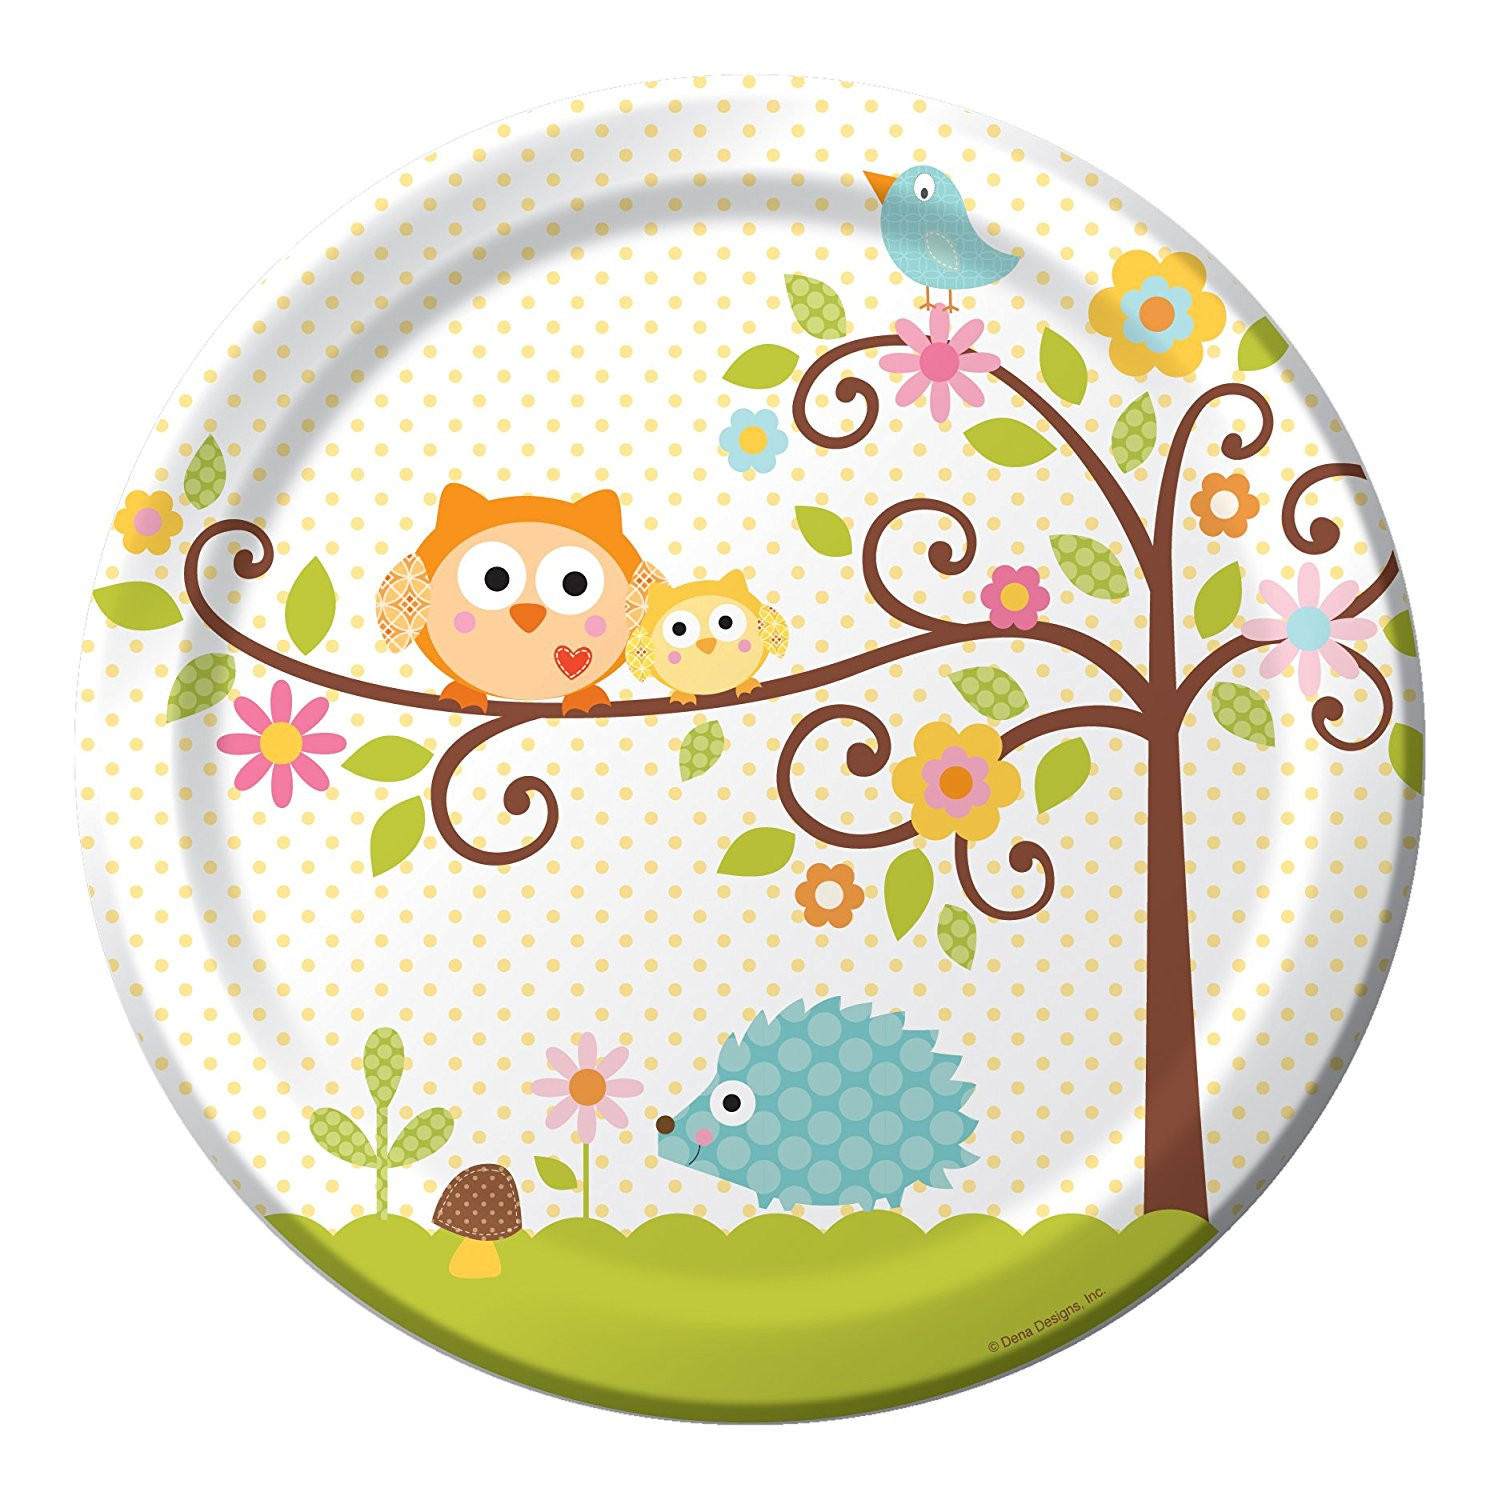 Owl Baby Shower Decorations Party City
 Happi Tree Owl